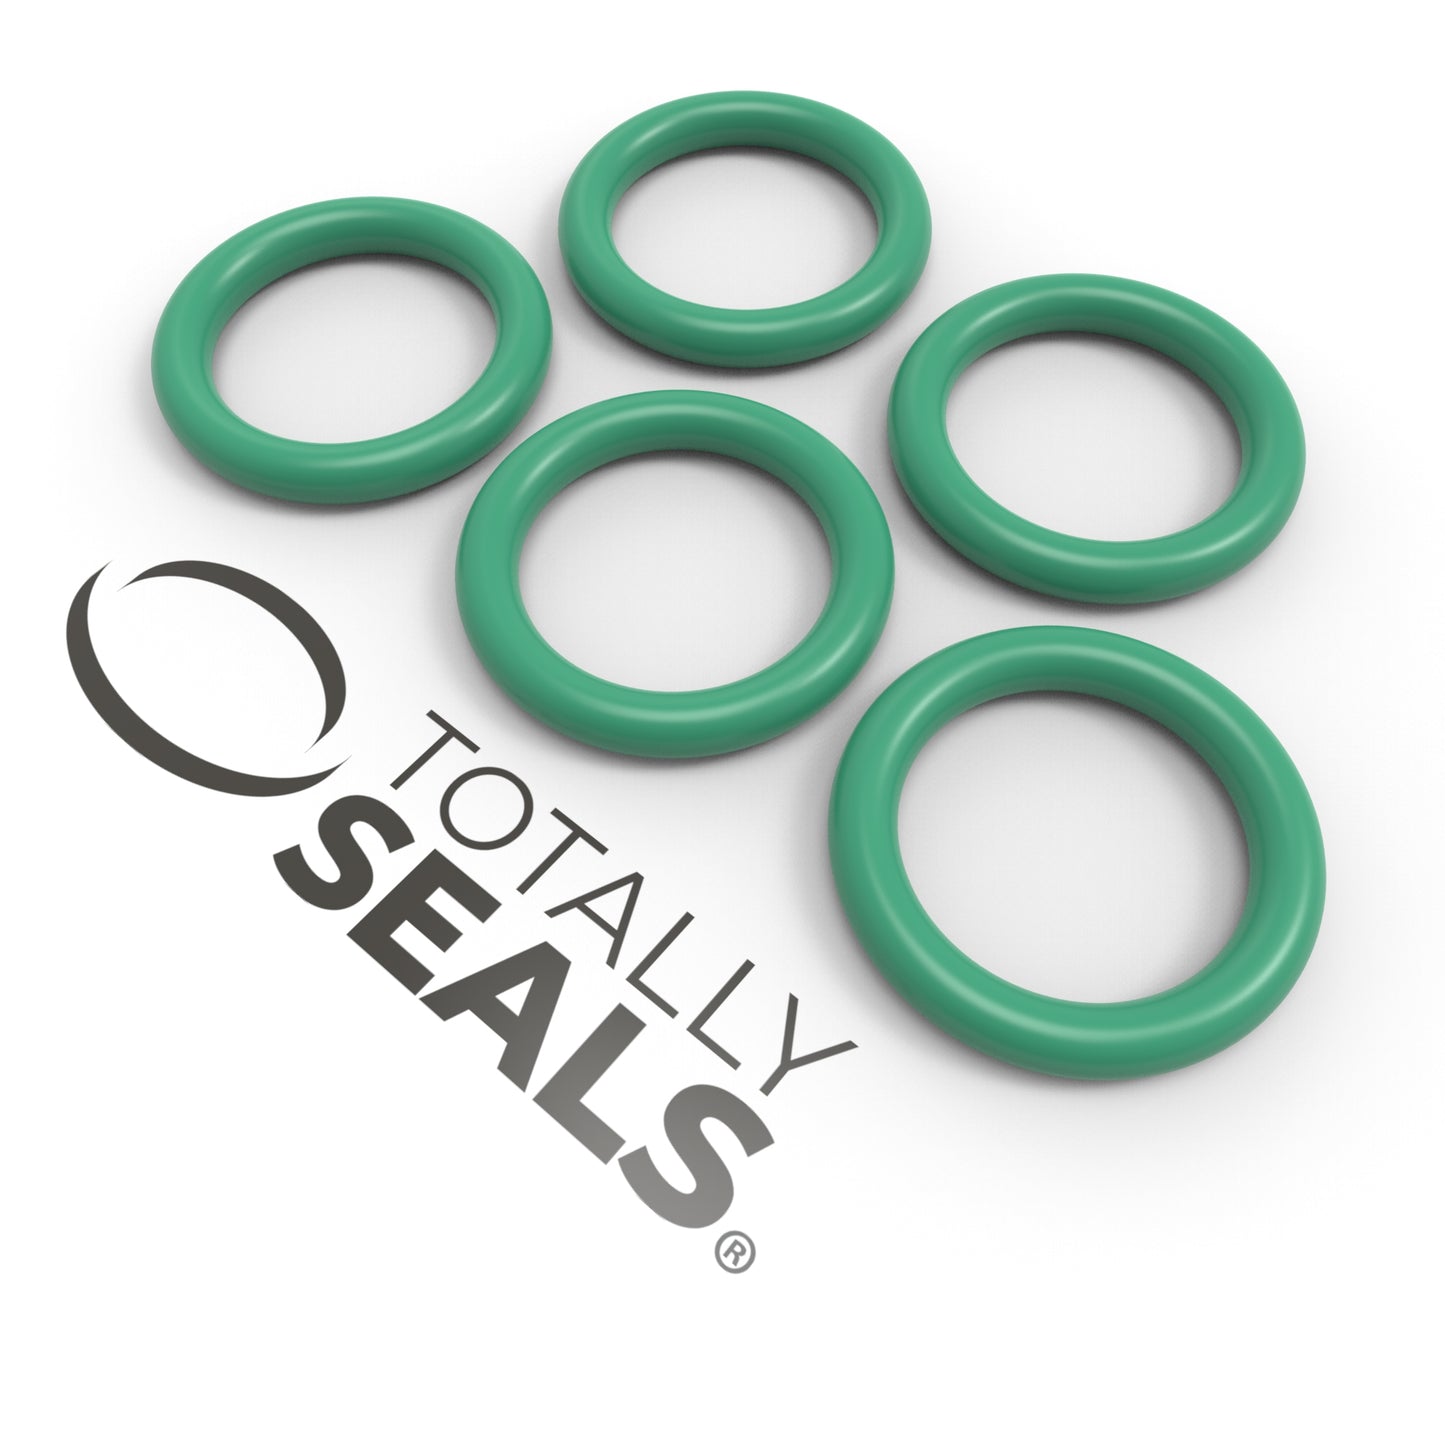 15mm x 2.5mm (20mm OD) FKM (Viton™) O-Rings - Totally Seals®